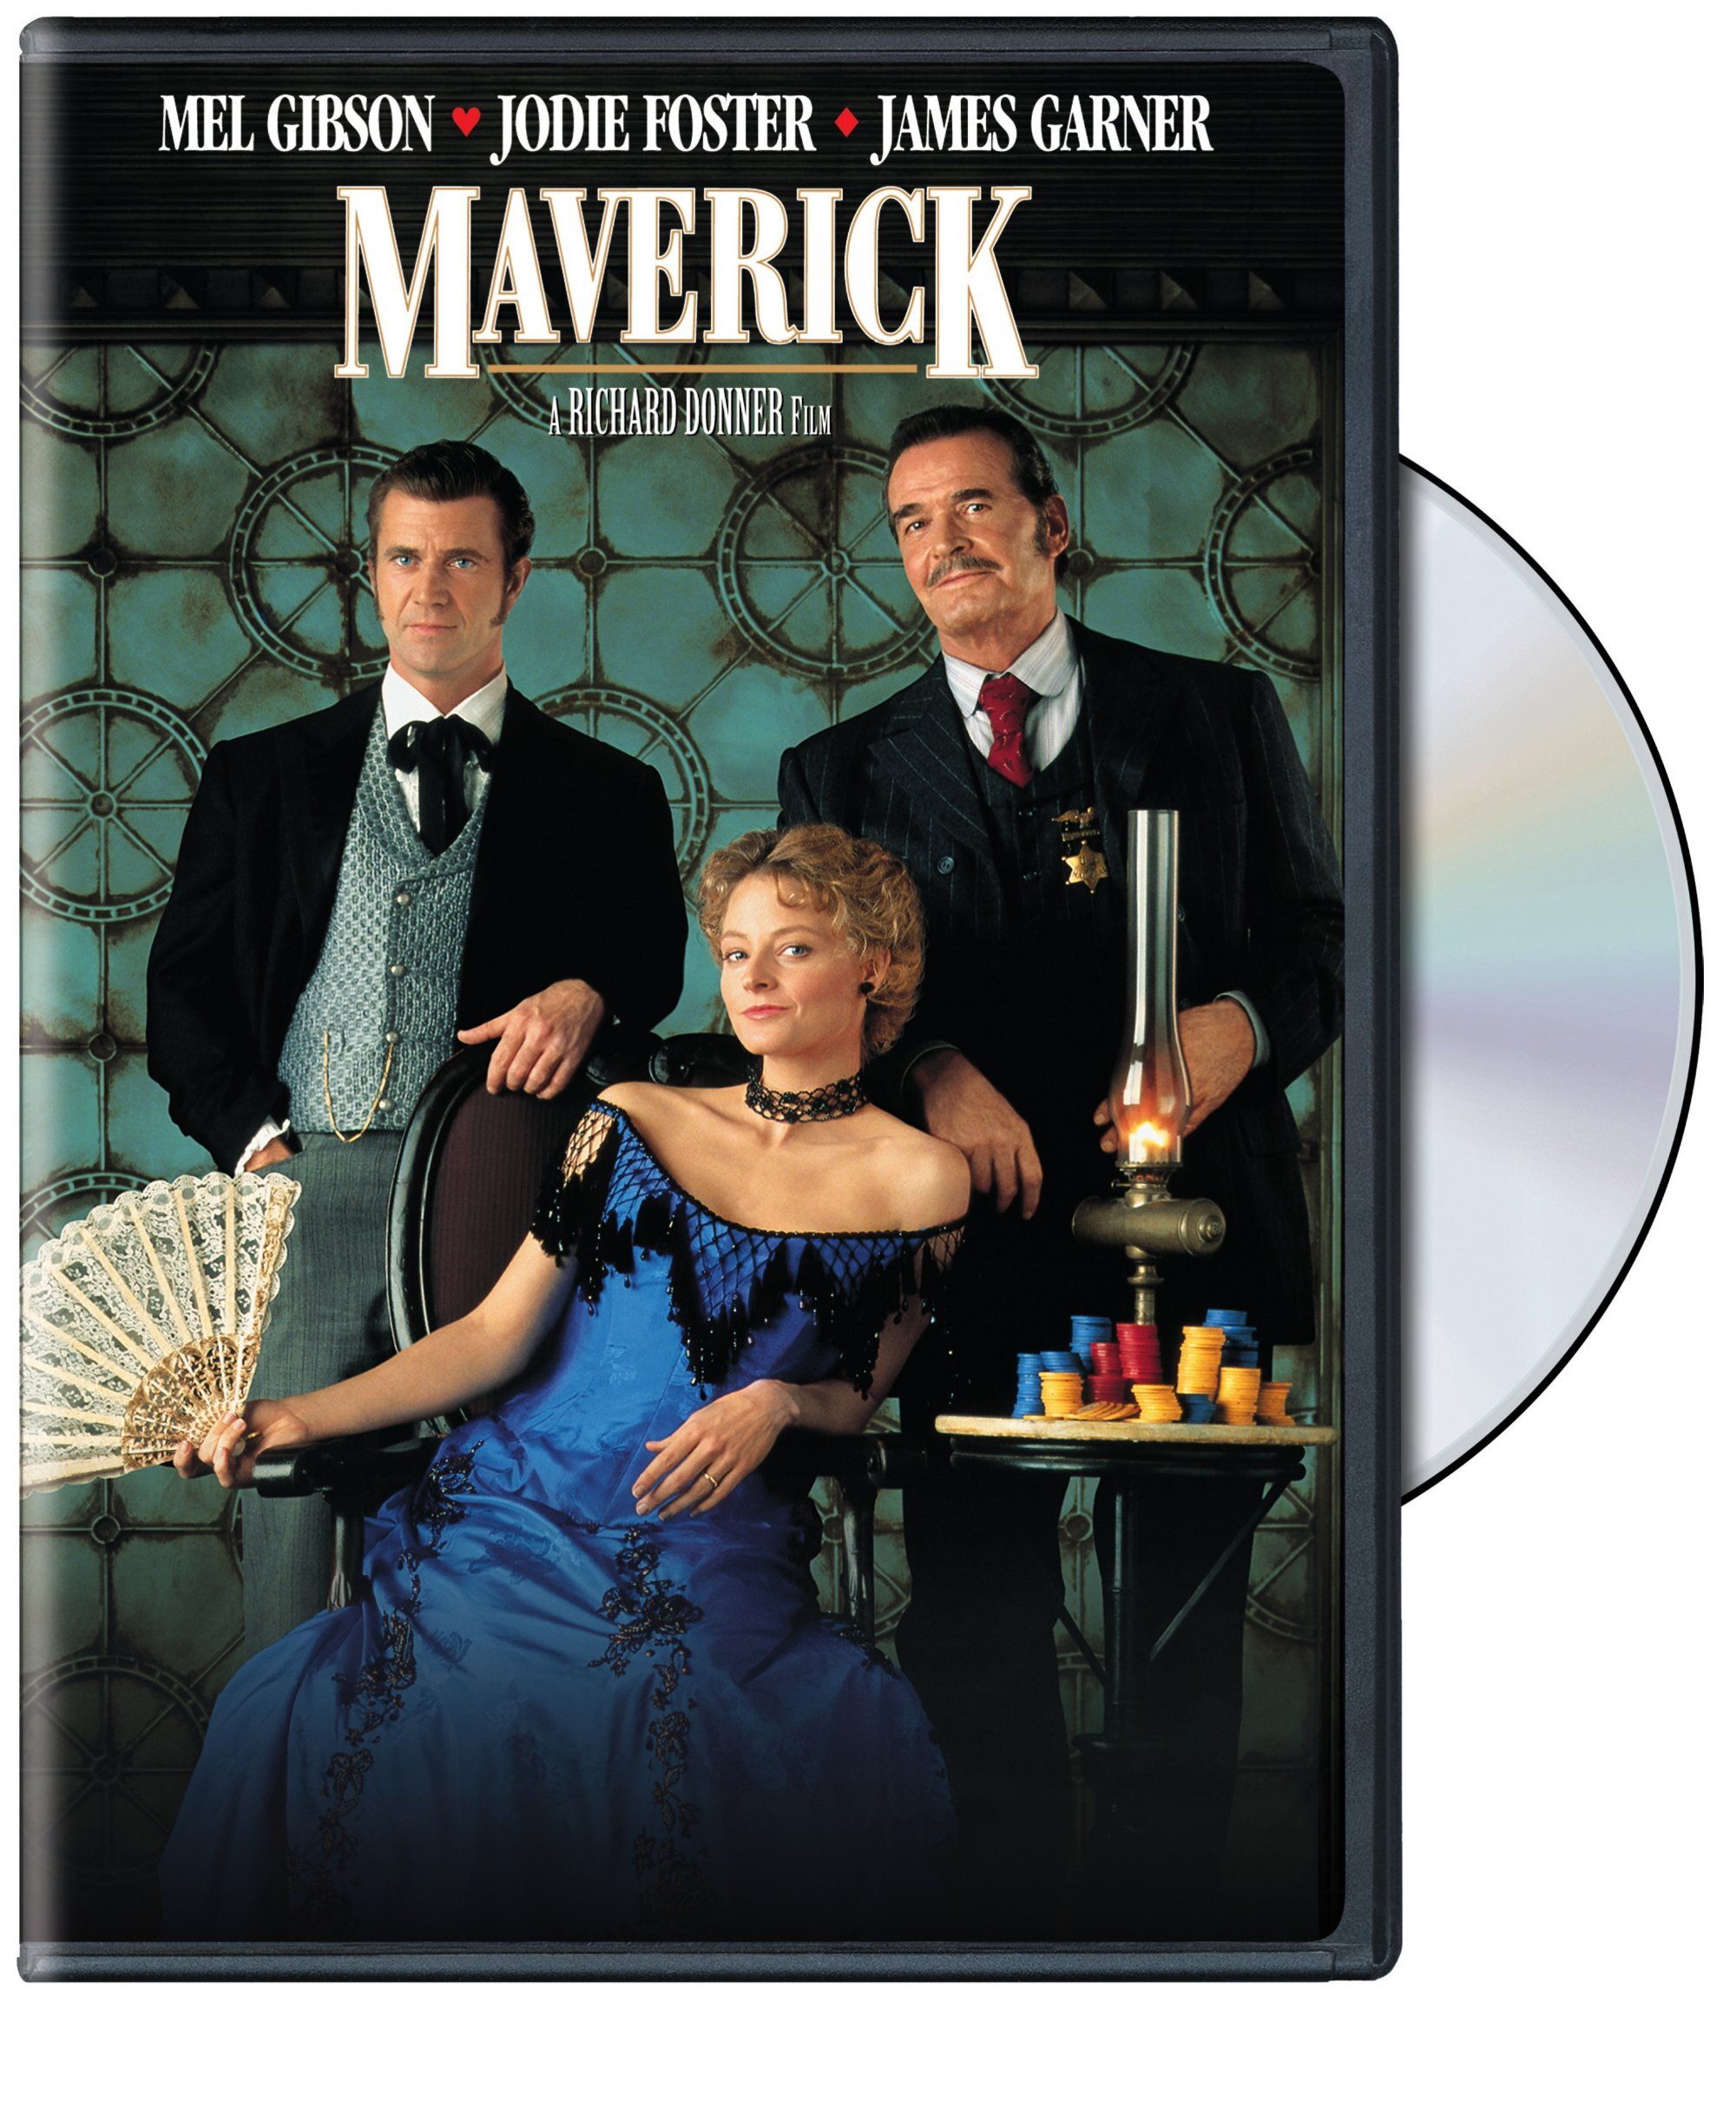 Maverick (DVD New Packaging) - DVD [ 1994 ]  - Western Movies On DVD - Movies On GRUV